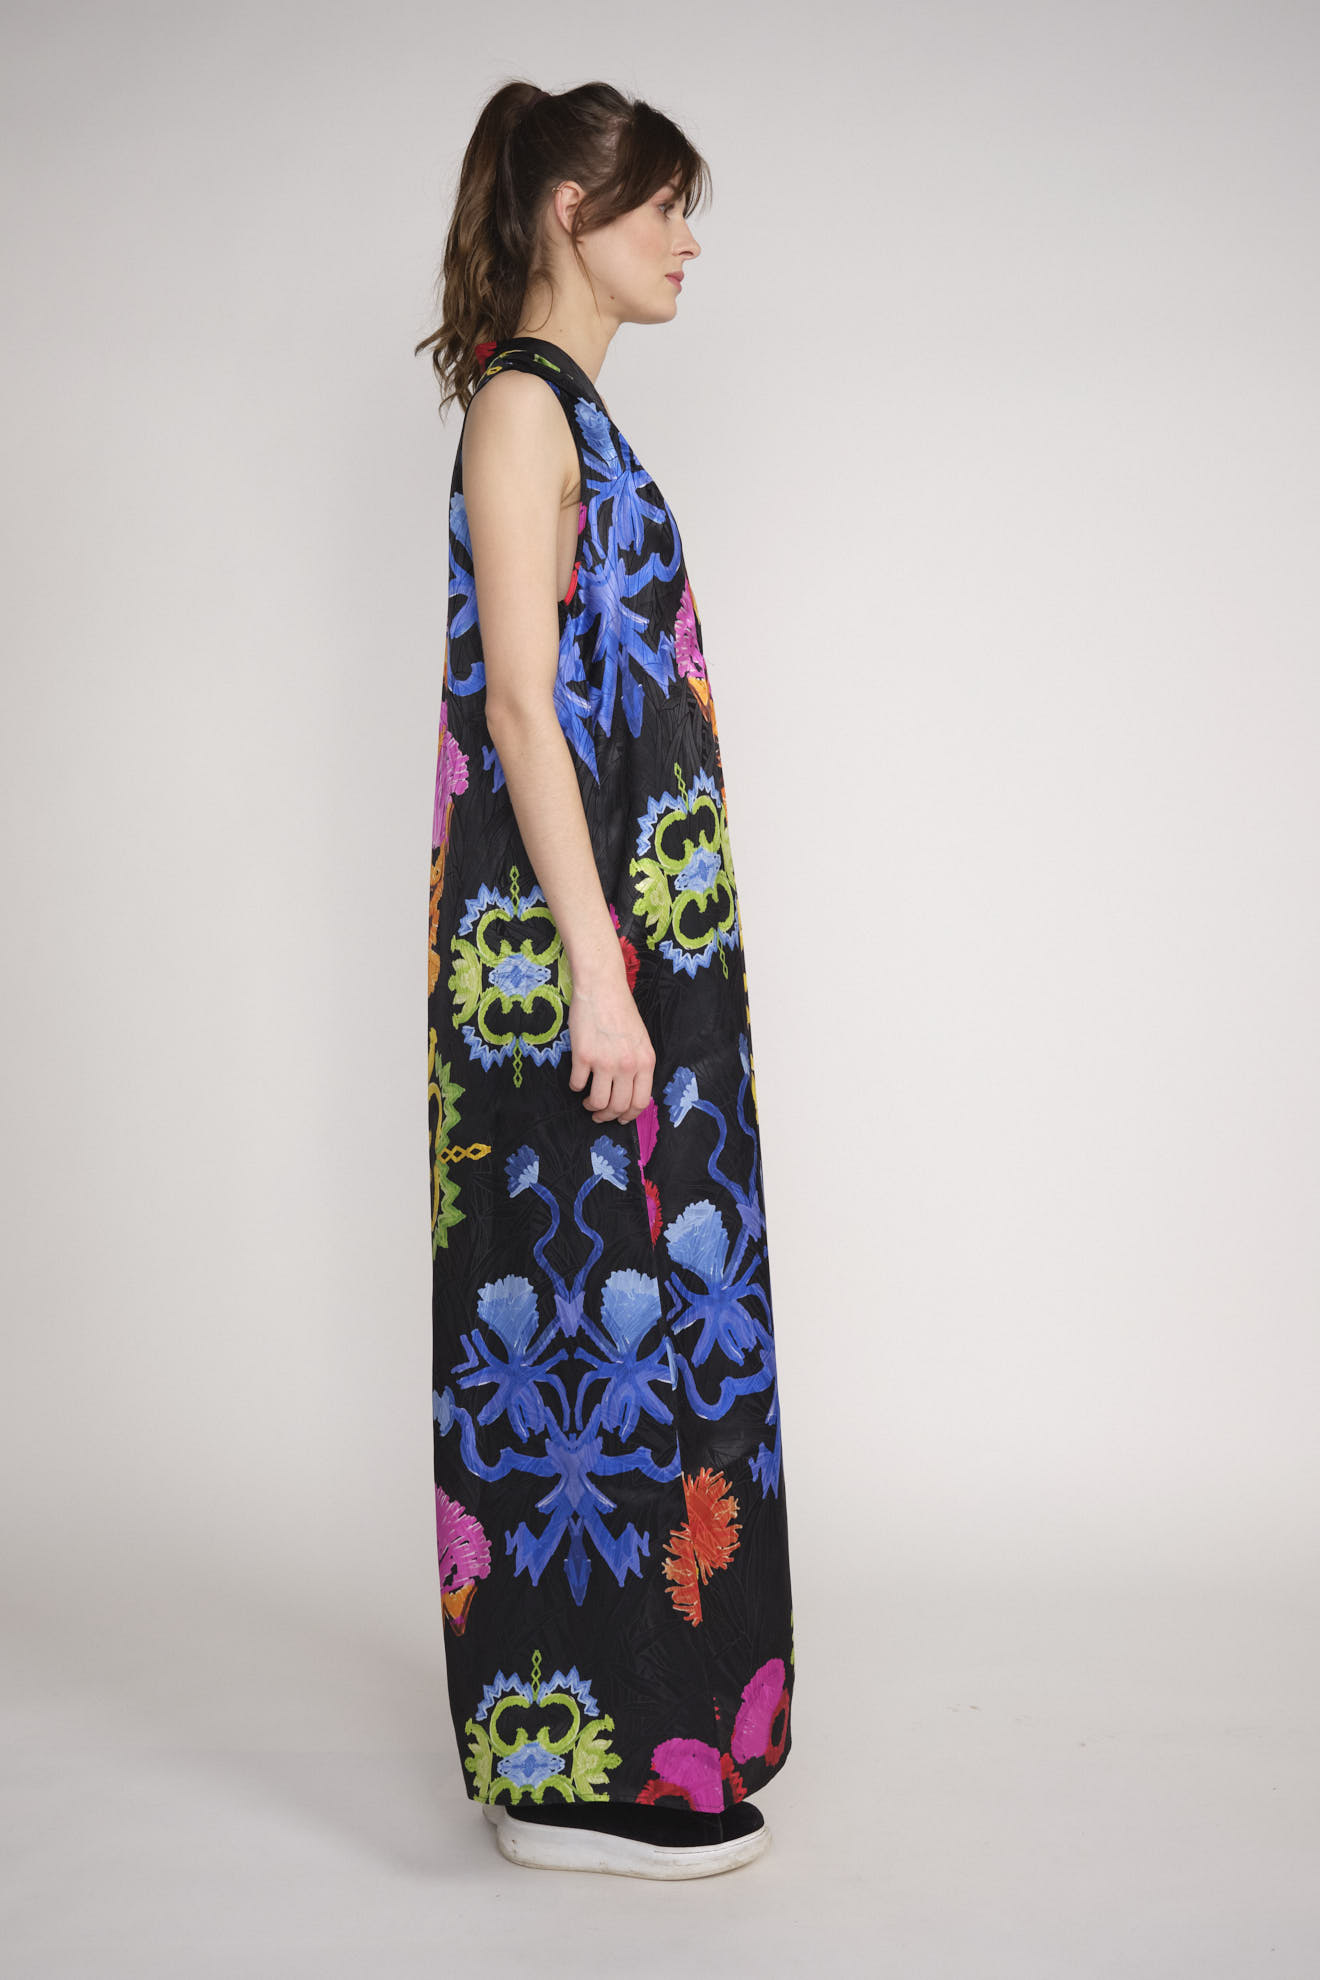 Rianna+Nina Mesogios Dress Sifnos - Robe midi ample en soie avec imprimés graphiques noir M/L